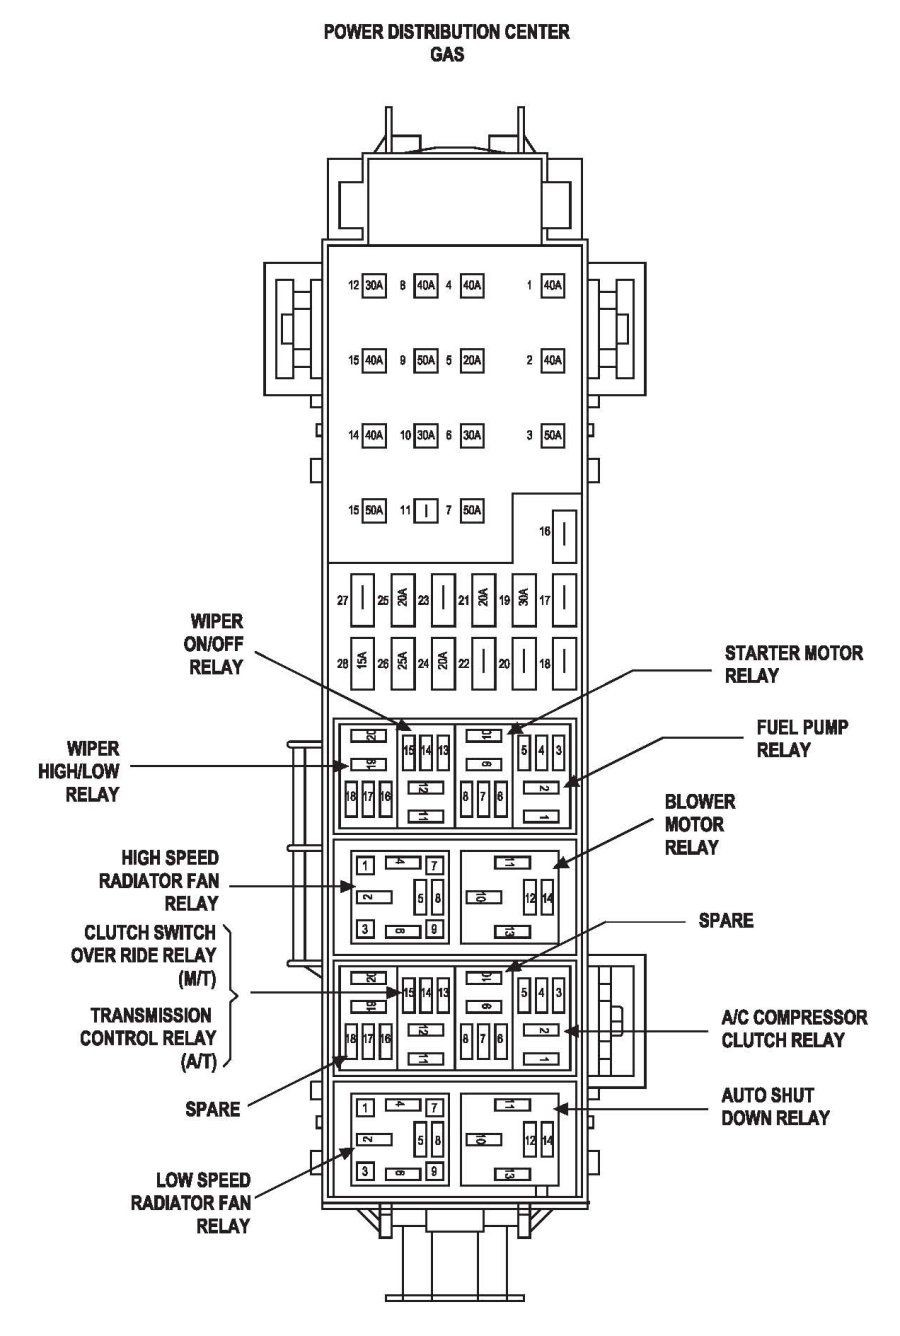 Jeep Liberty Fuse Box Diagram image details